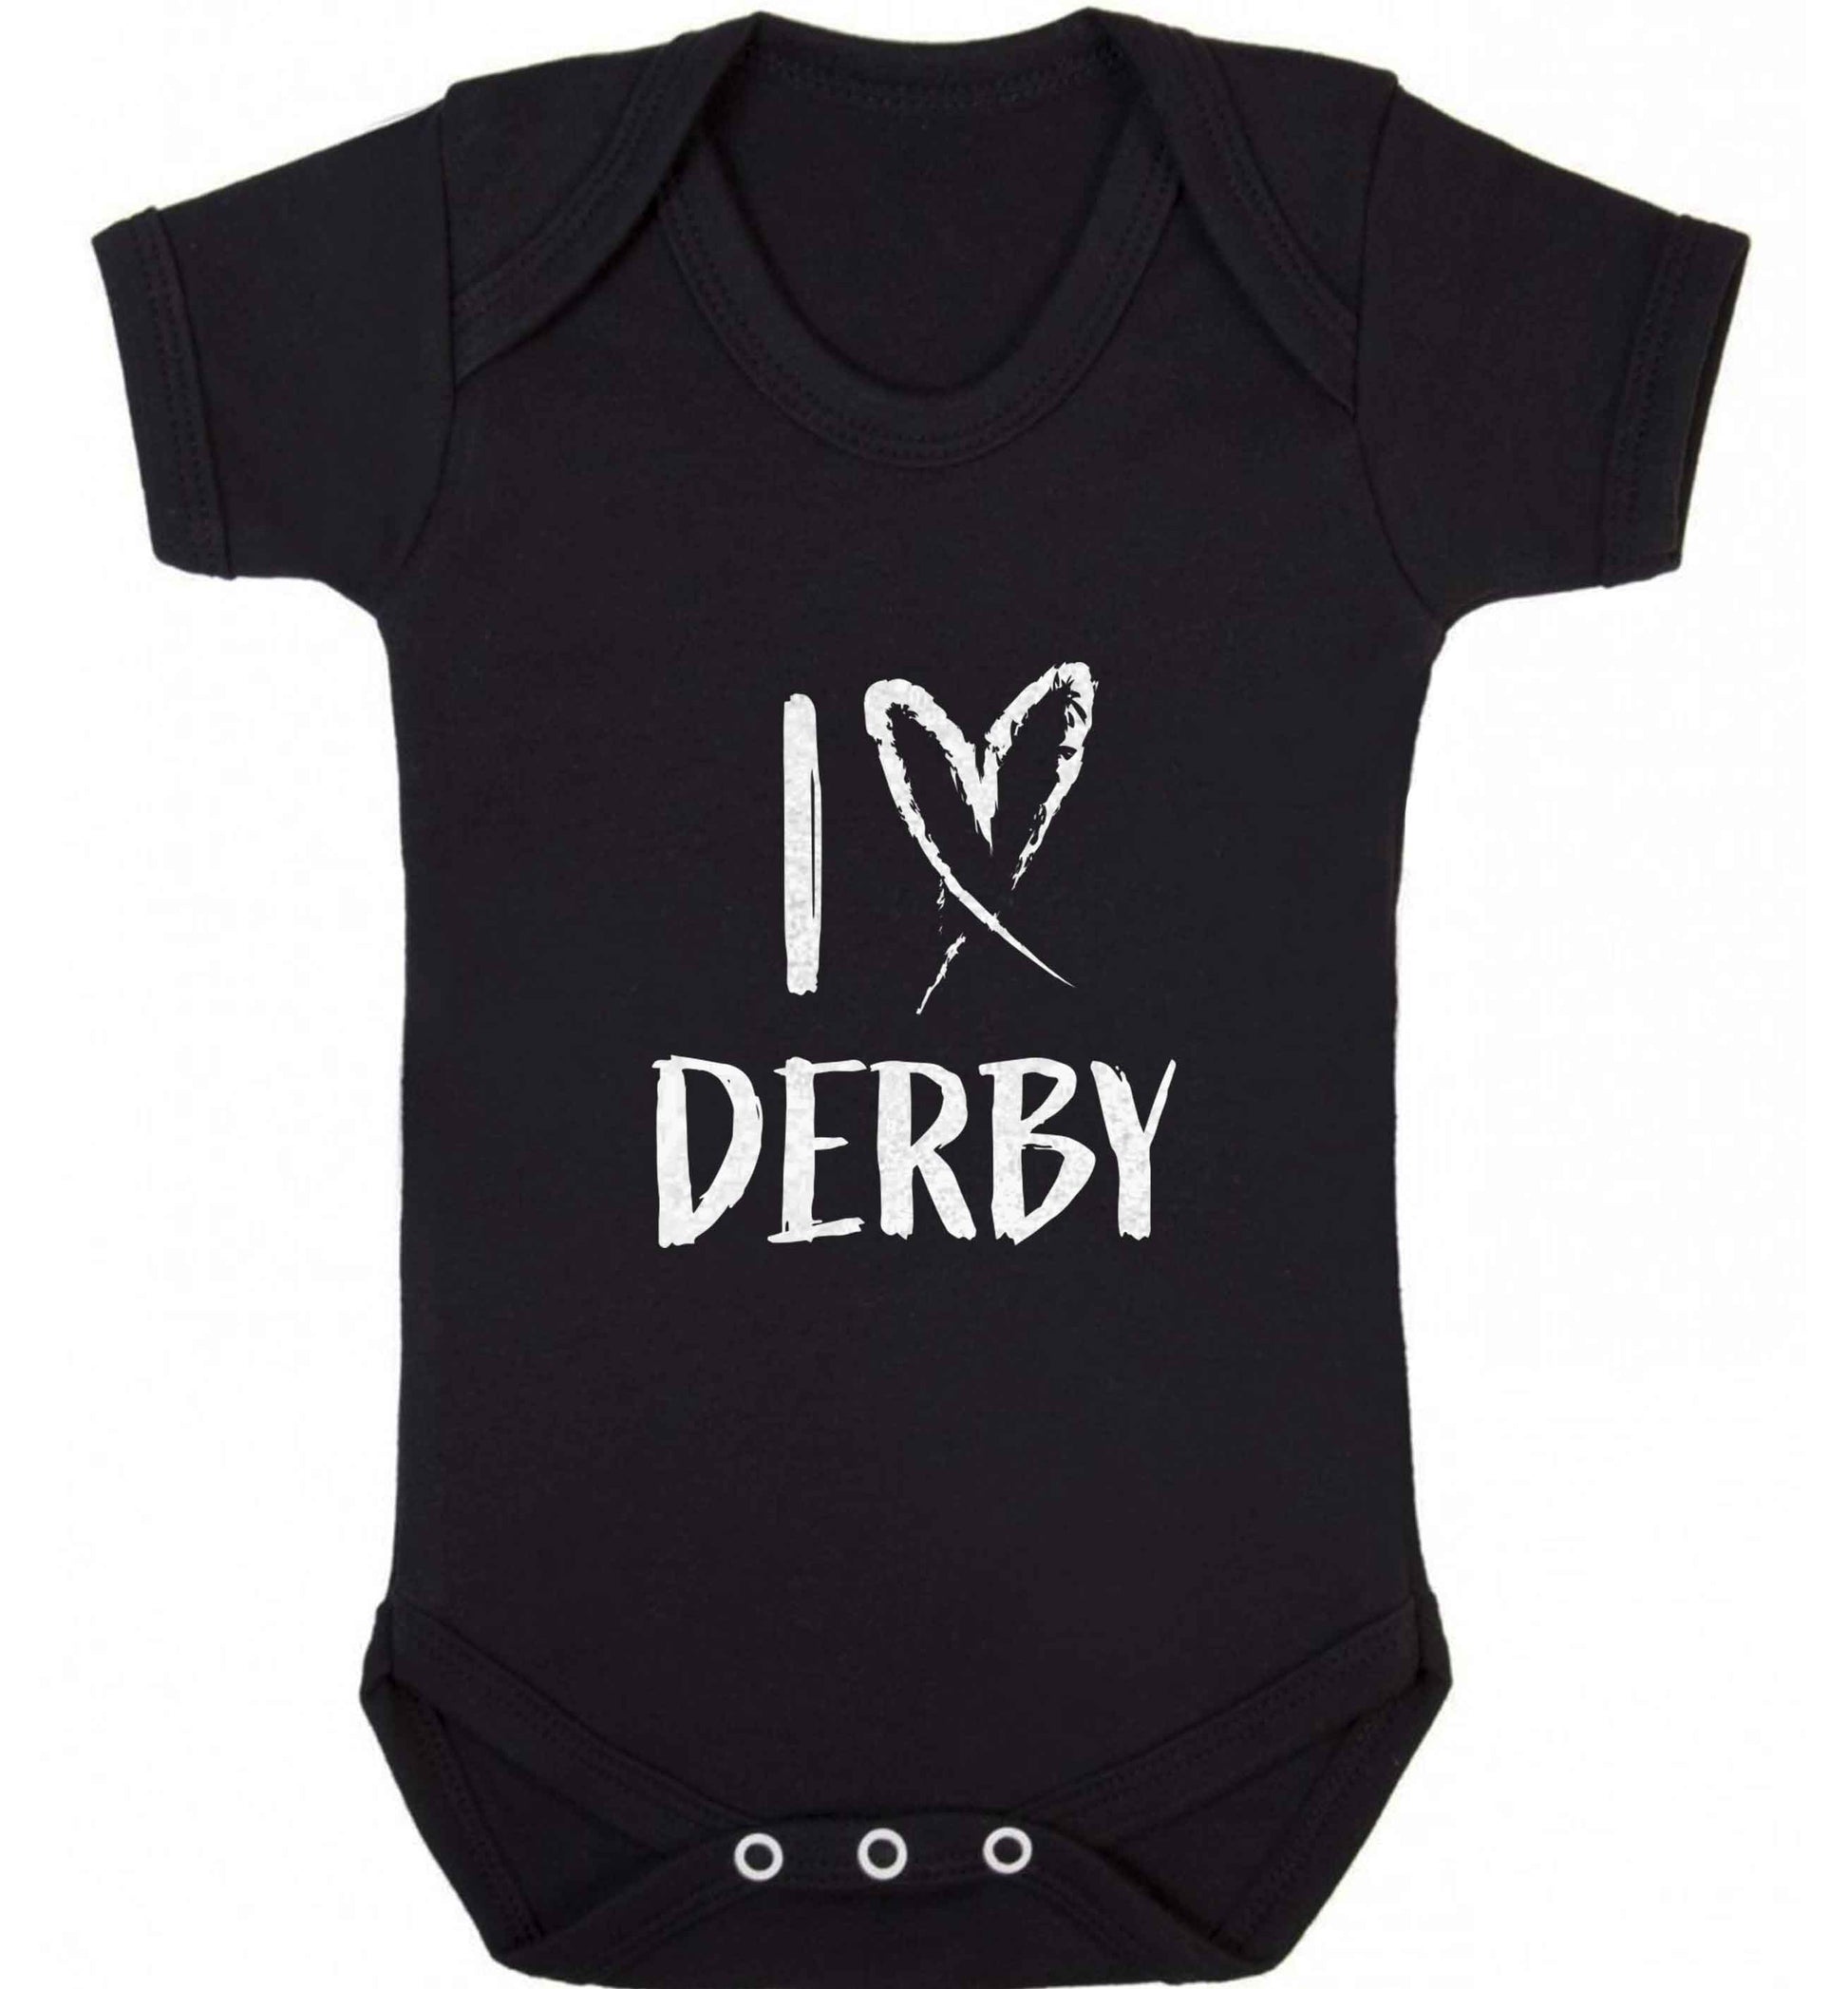 I love Derby baby vest black 18-24 months